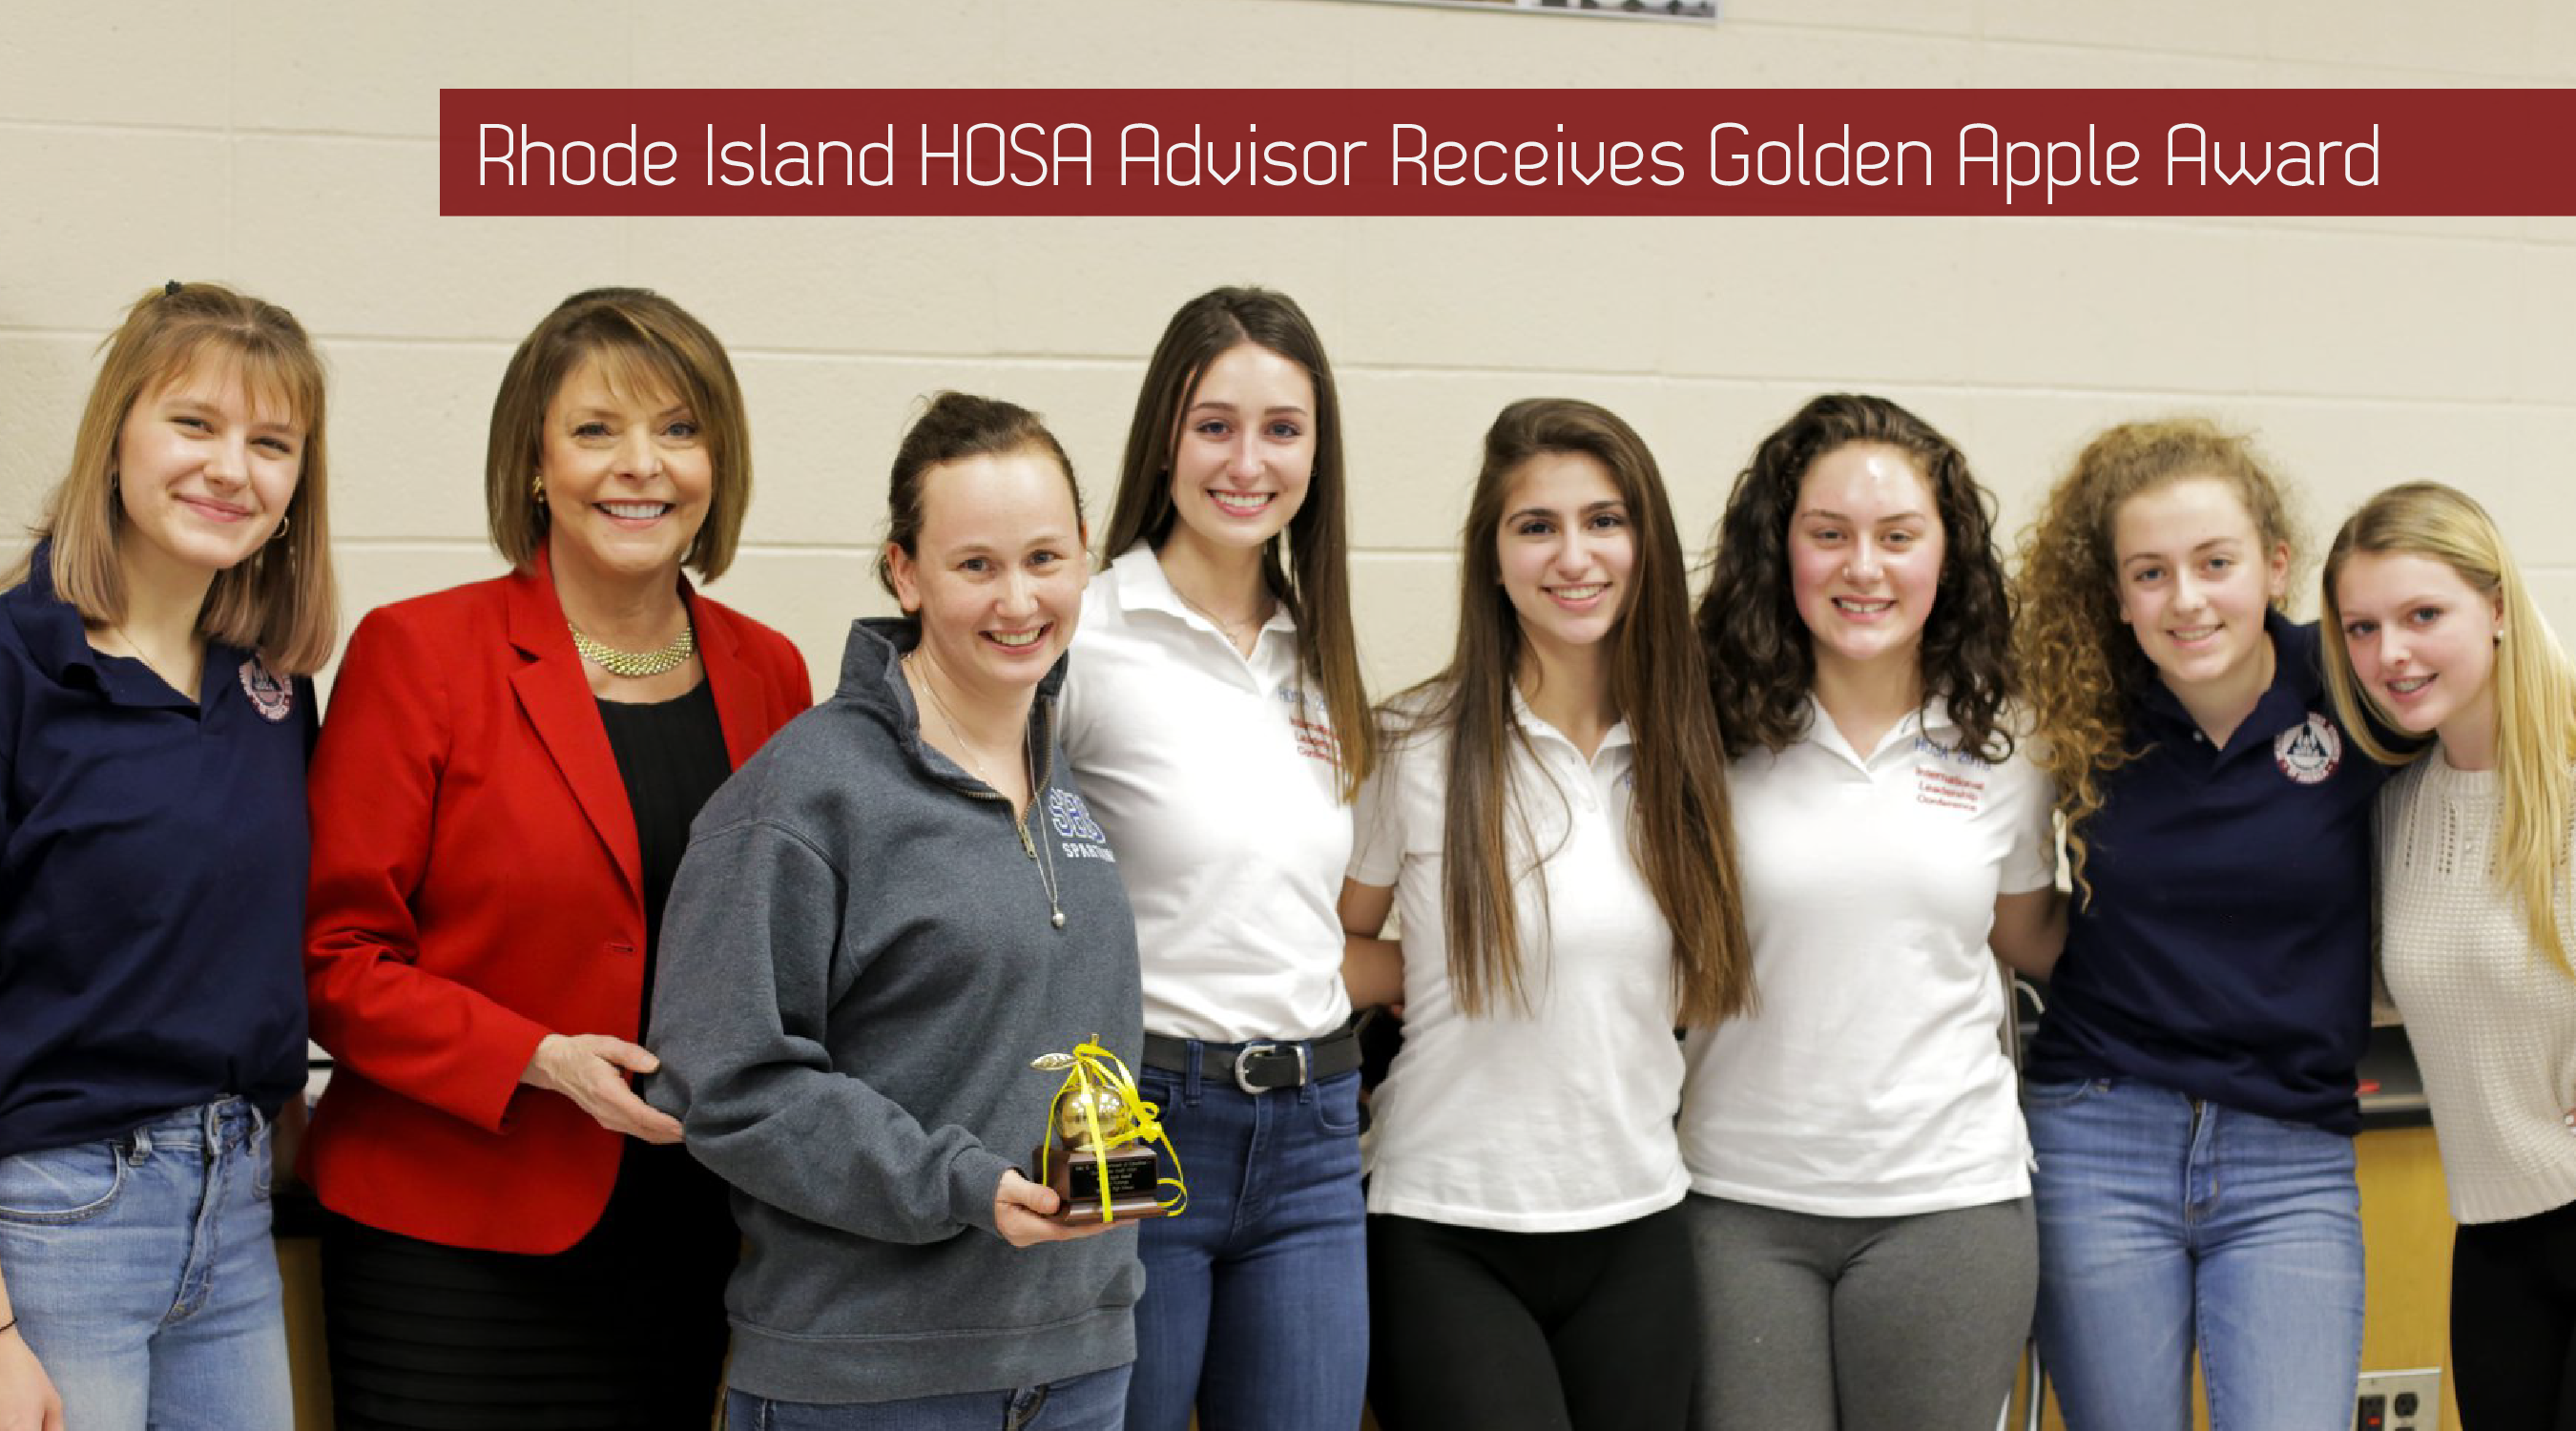 Rhode Island HOSA Advisor Received Golden Apple Award